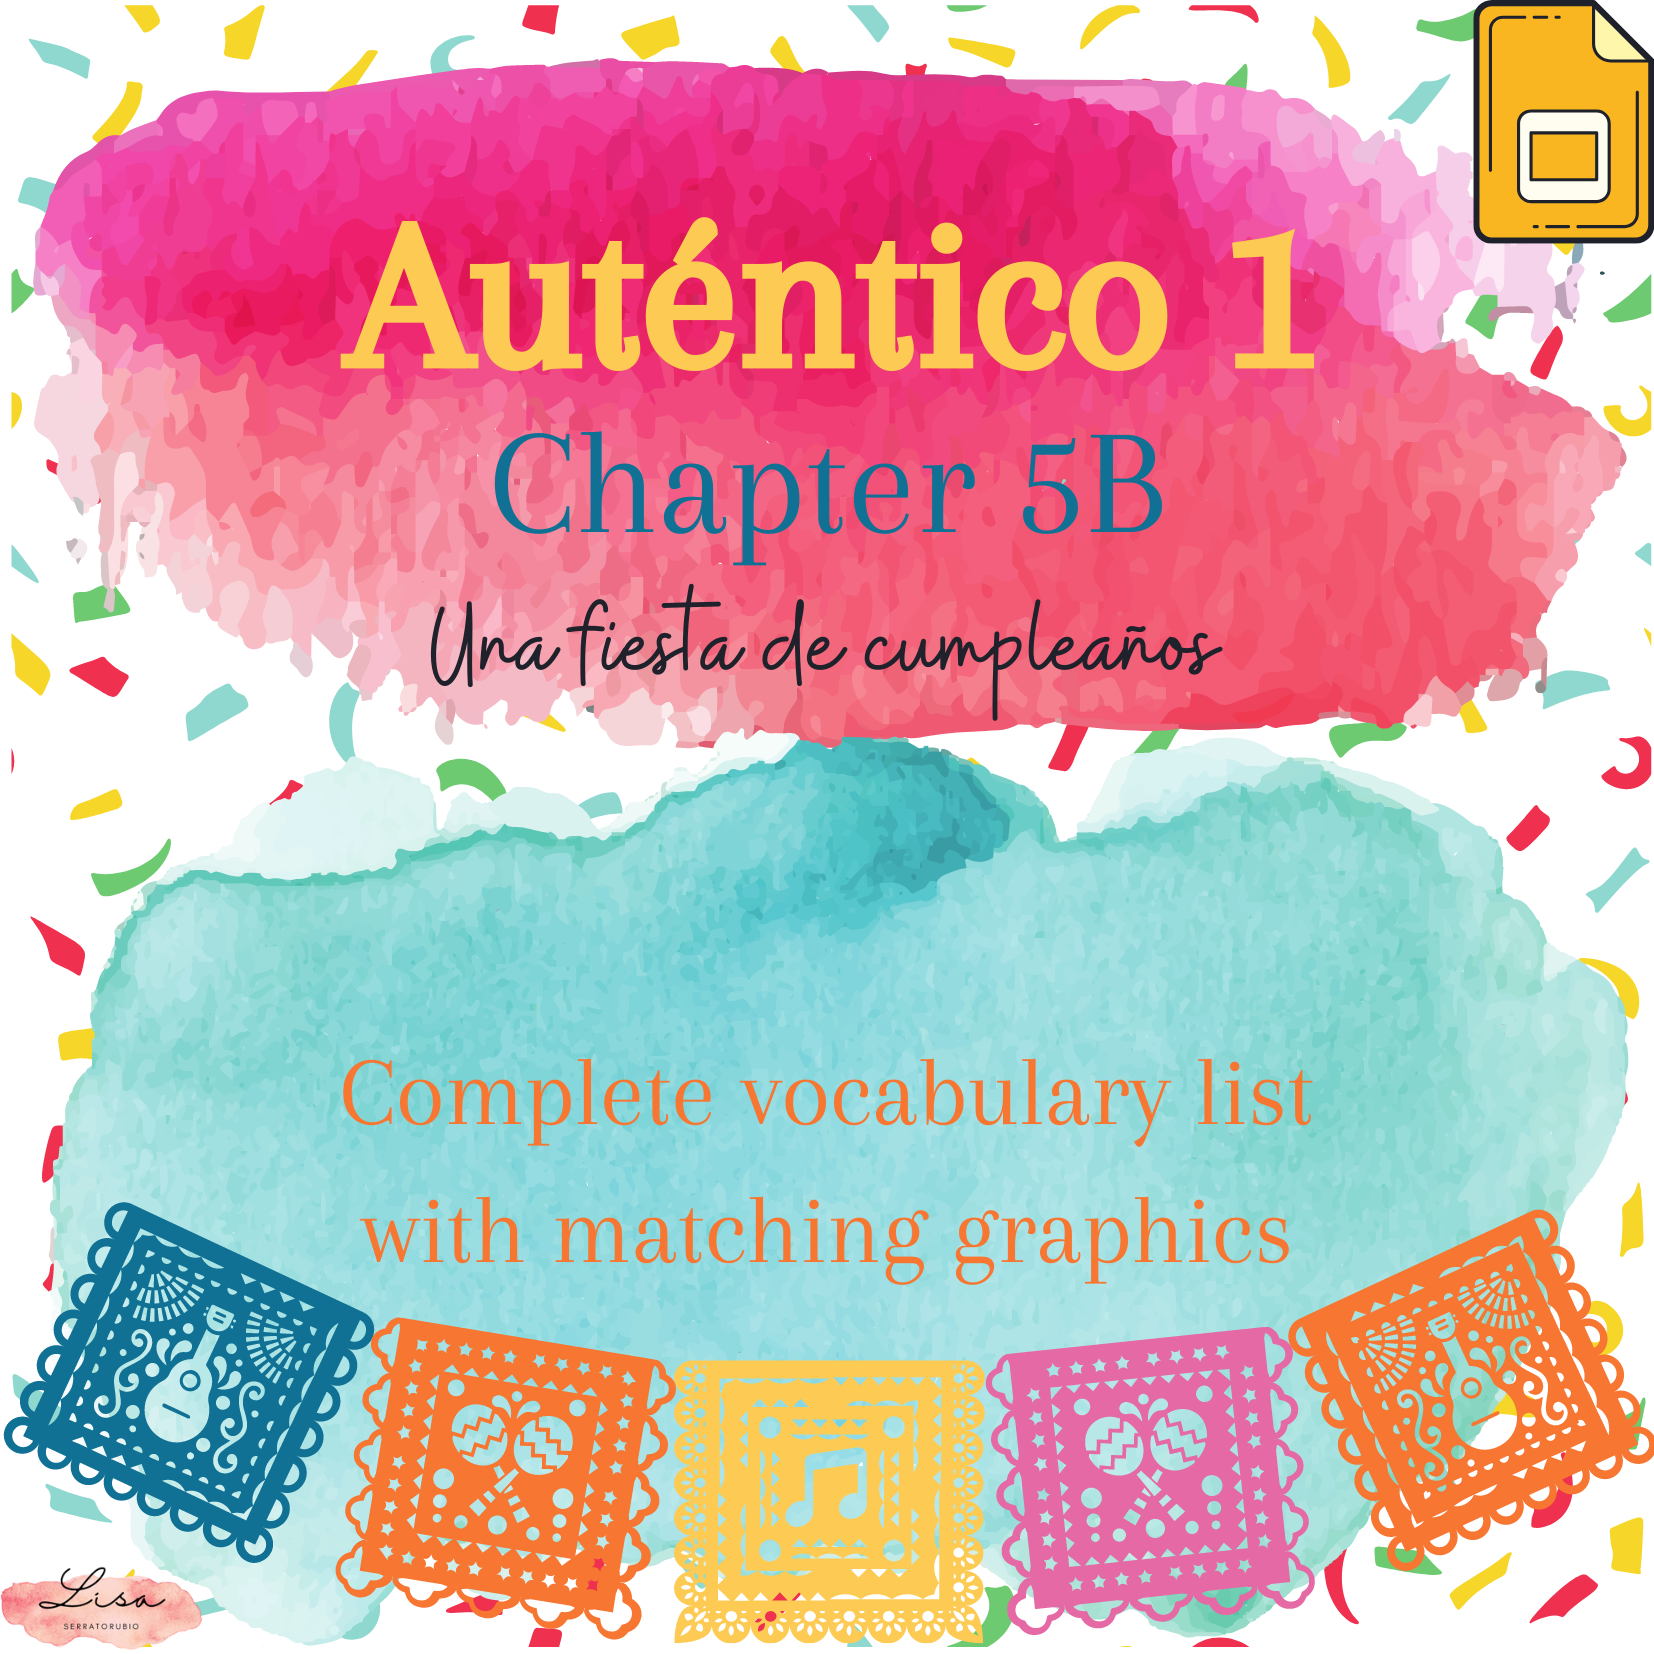 Auténtico 1 Chapter 5B Vocabulary Slide Show's featured image